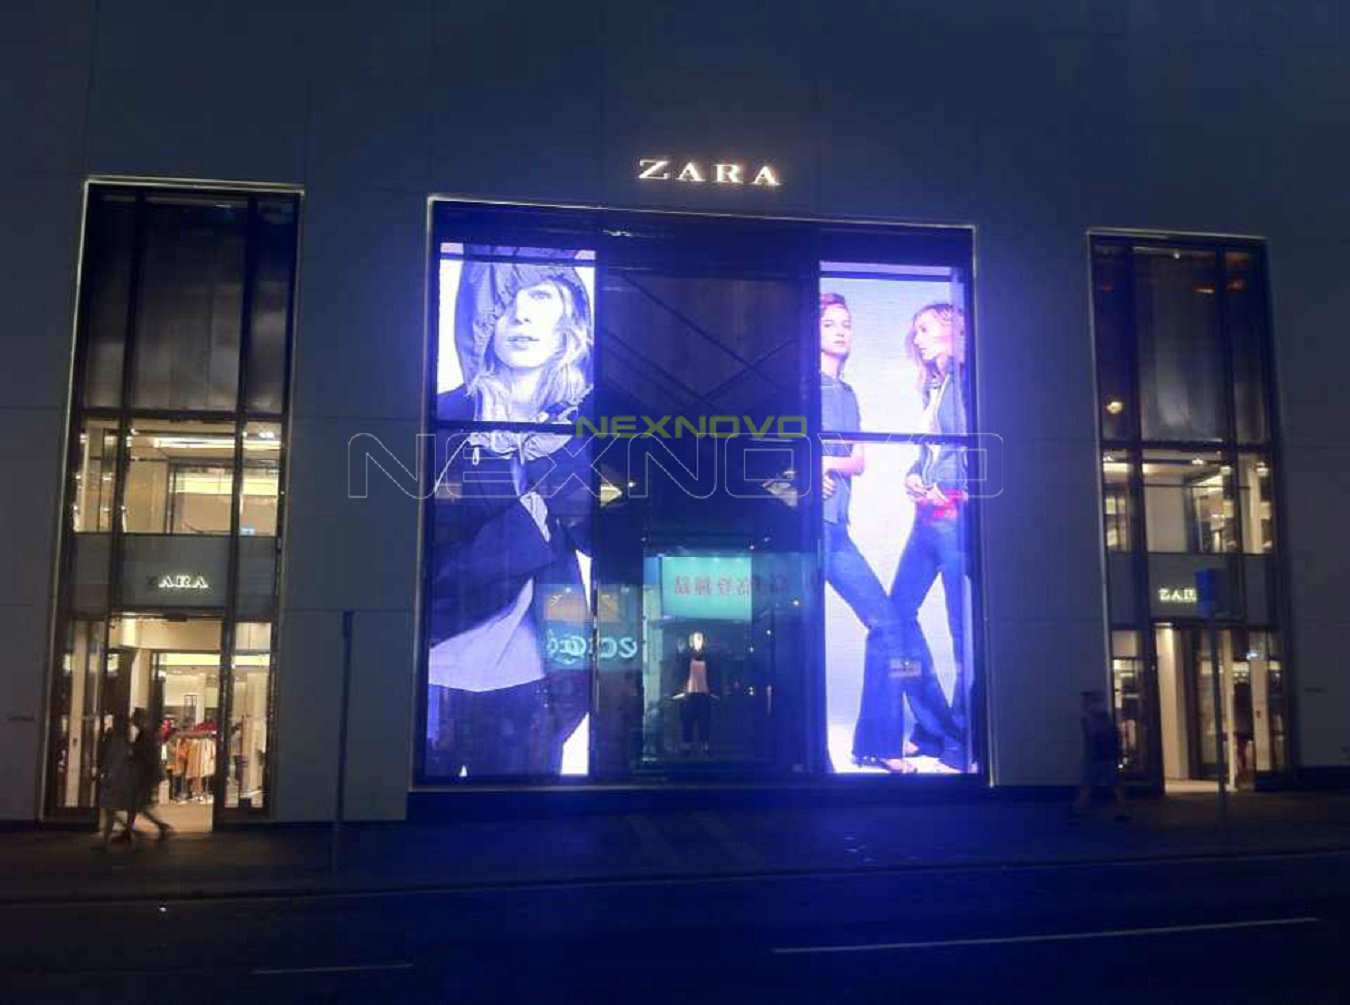 Hong Kong ZARA flagship transparent LED display project